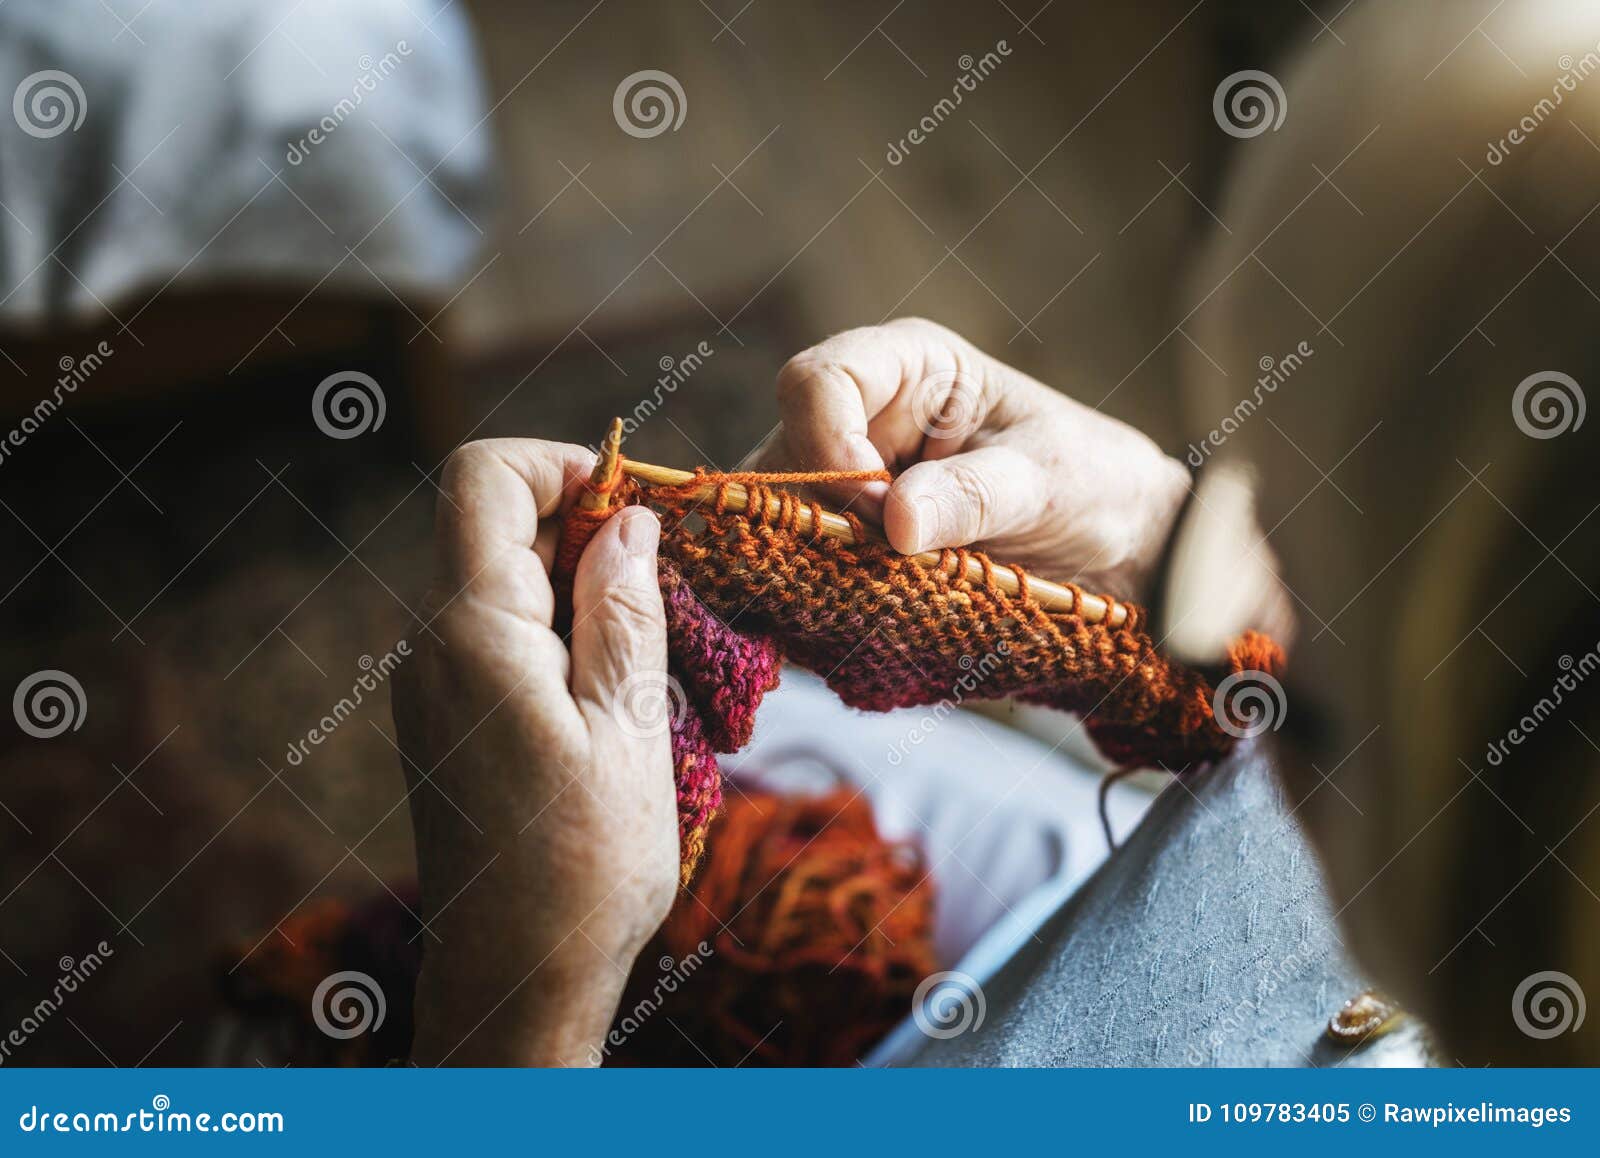 senior woman knitting for hobby at home